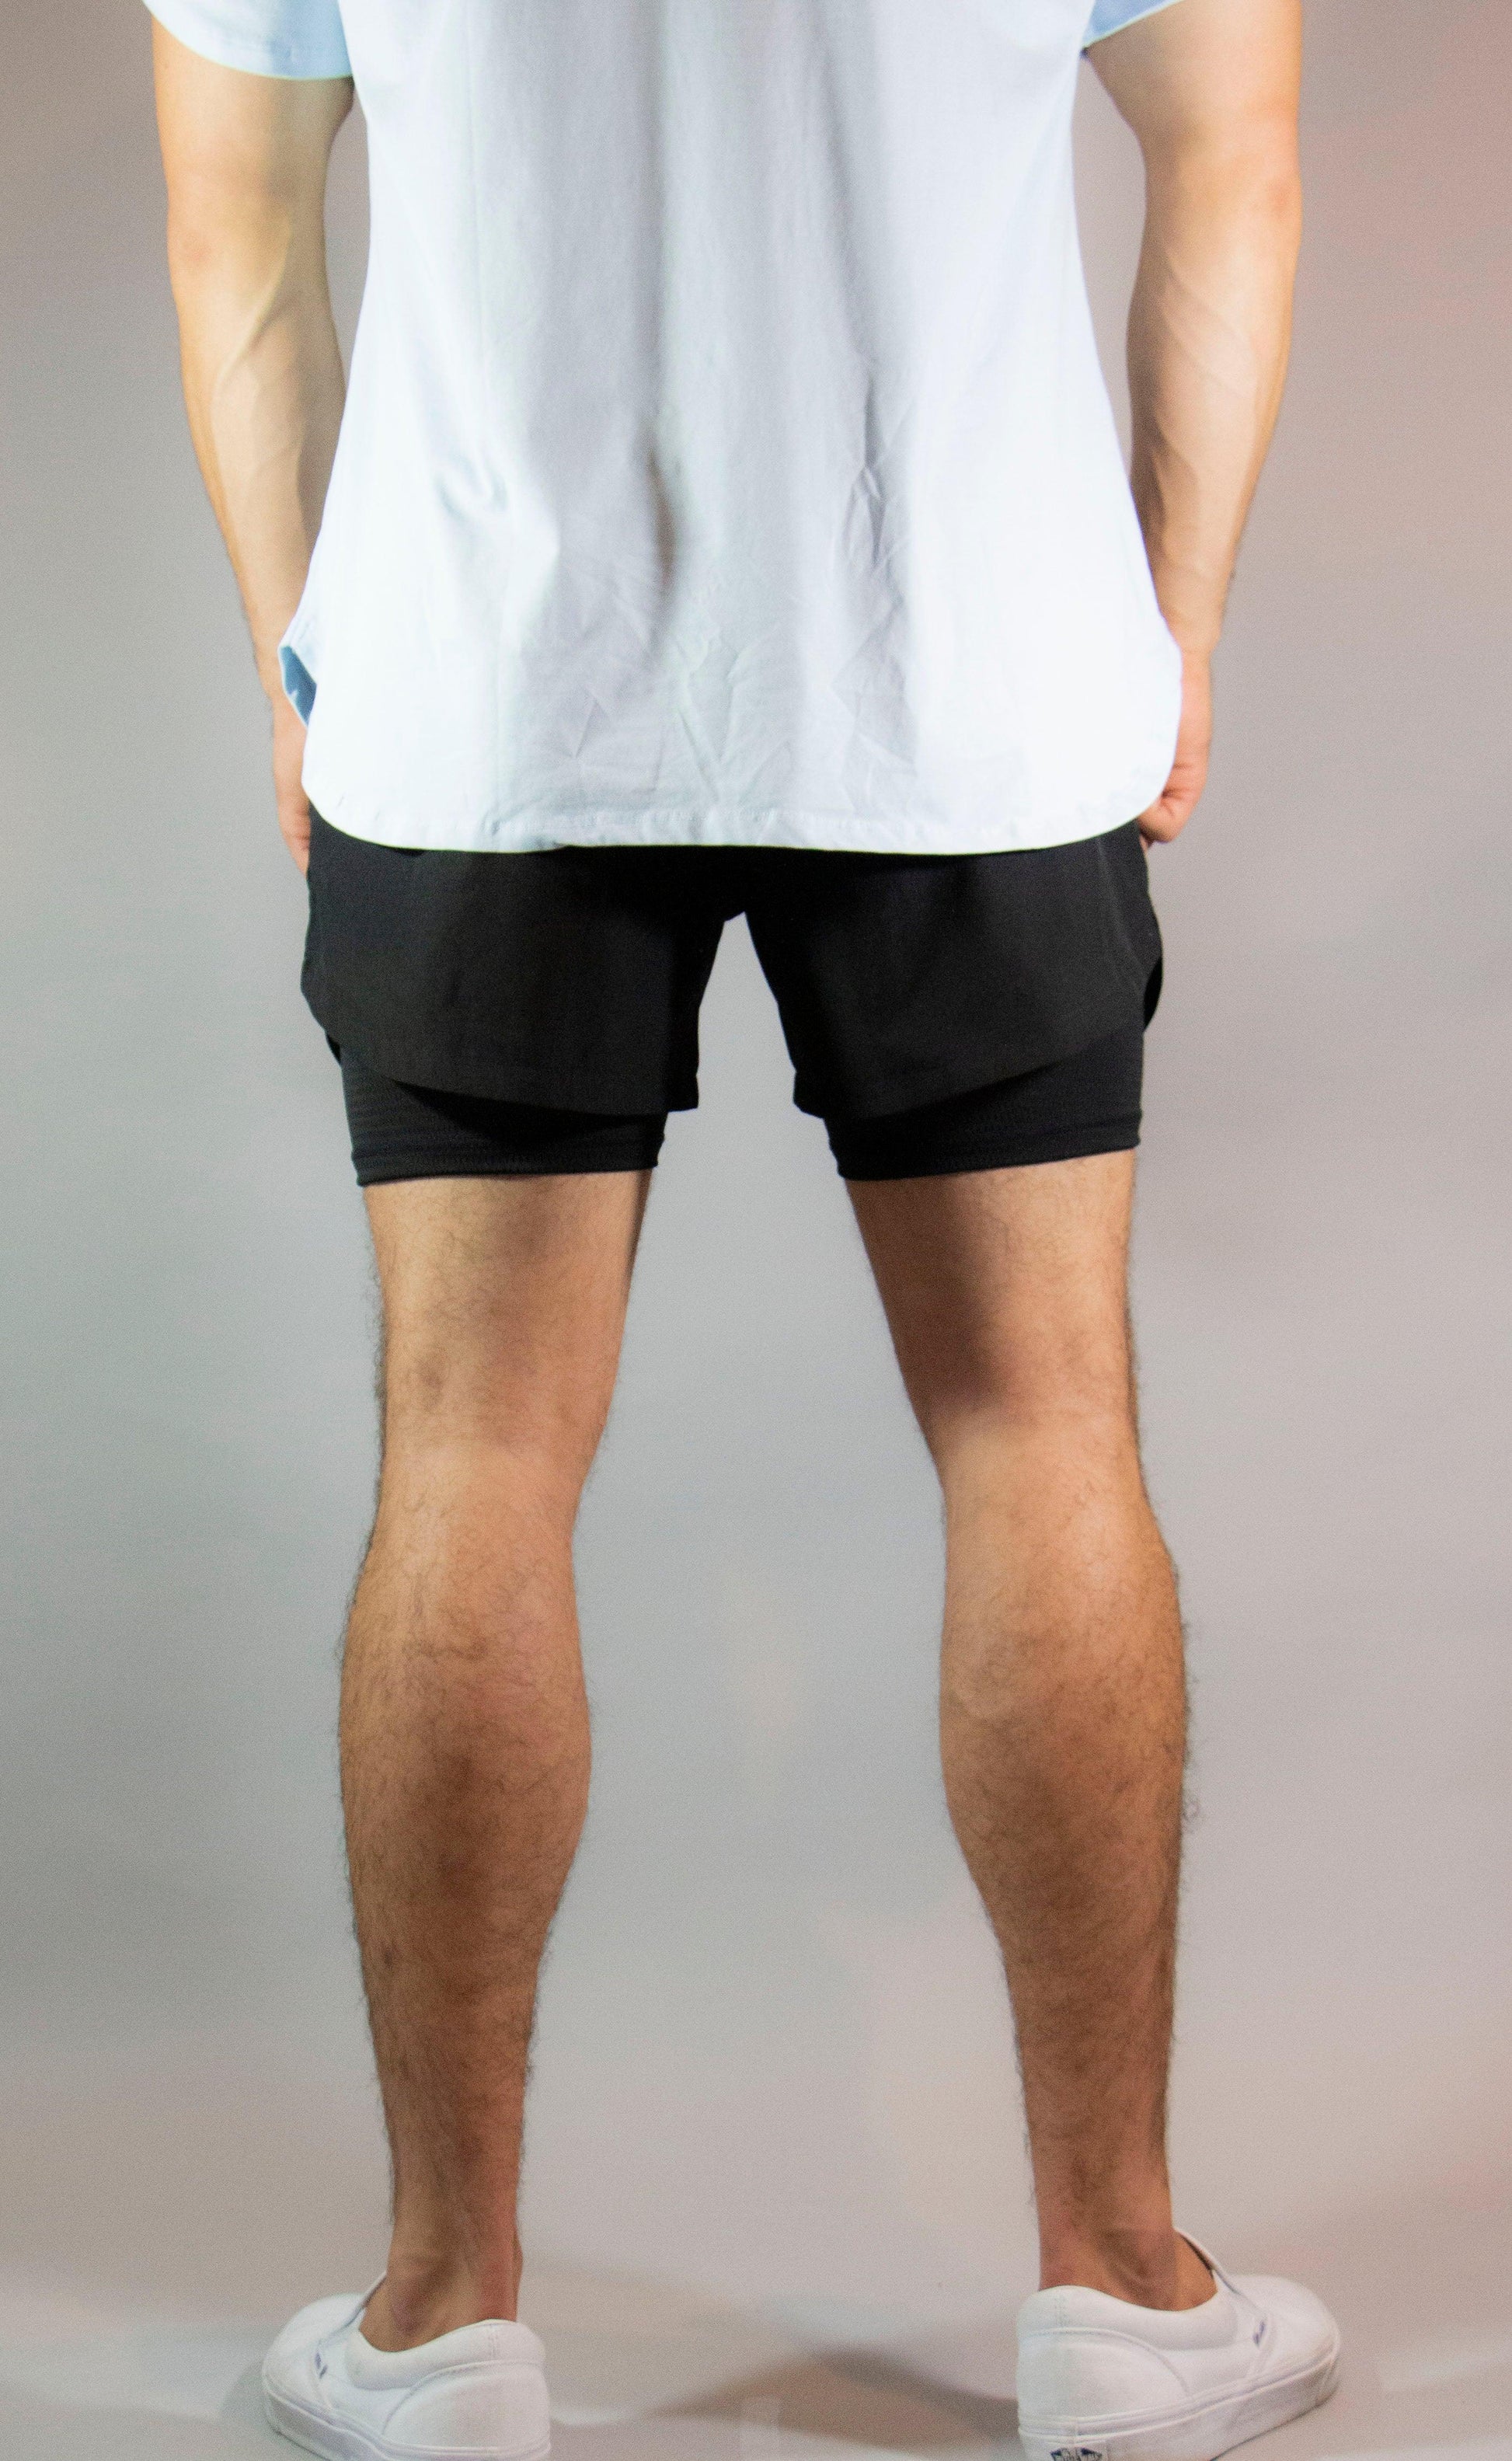 Basic b*tch'' black cool unisex 2-in-1 running & fitness shorts